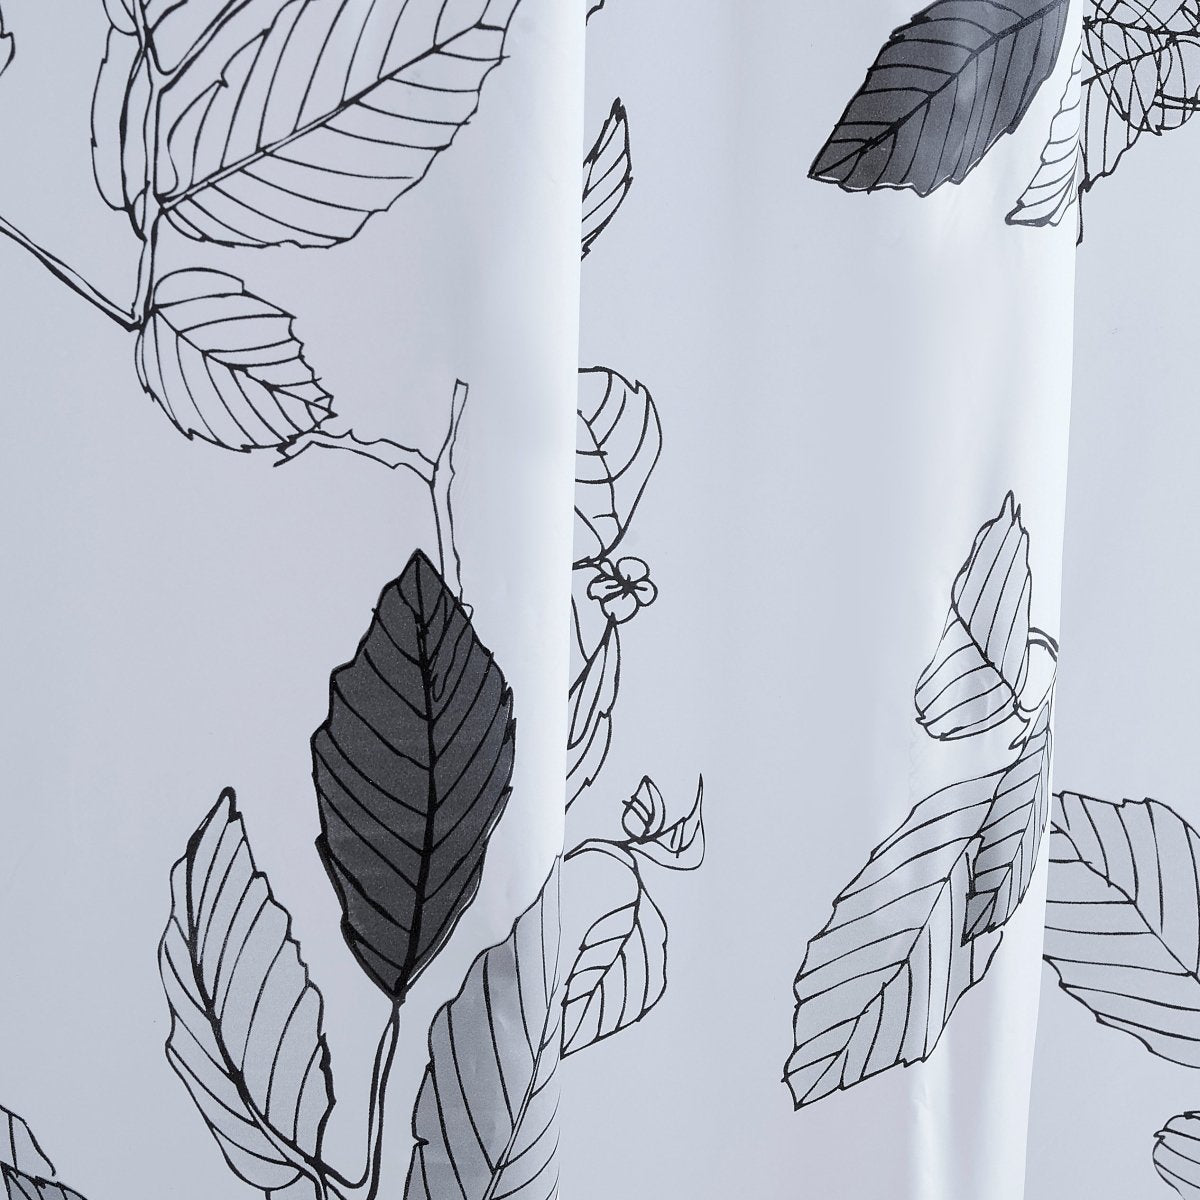 14pc Hooks with Hamper Polyester Shower Curtain Set - Spirit Linen